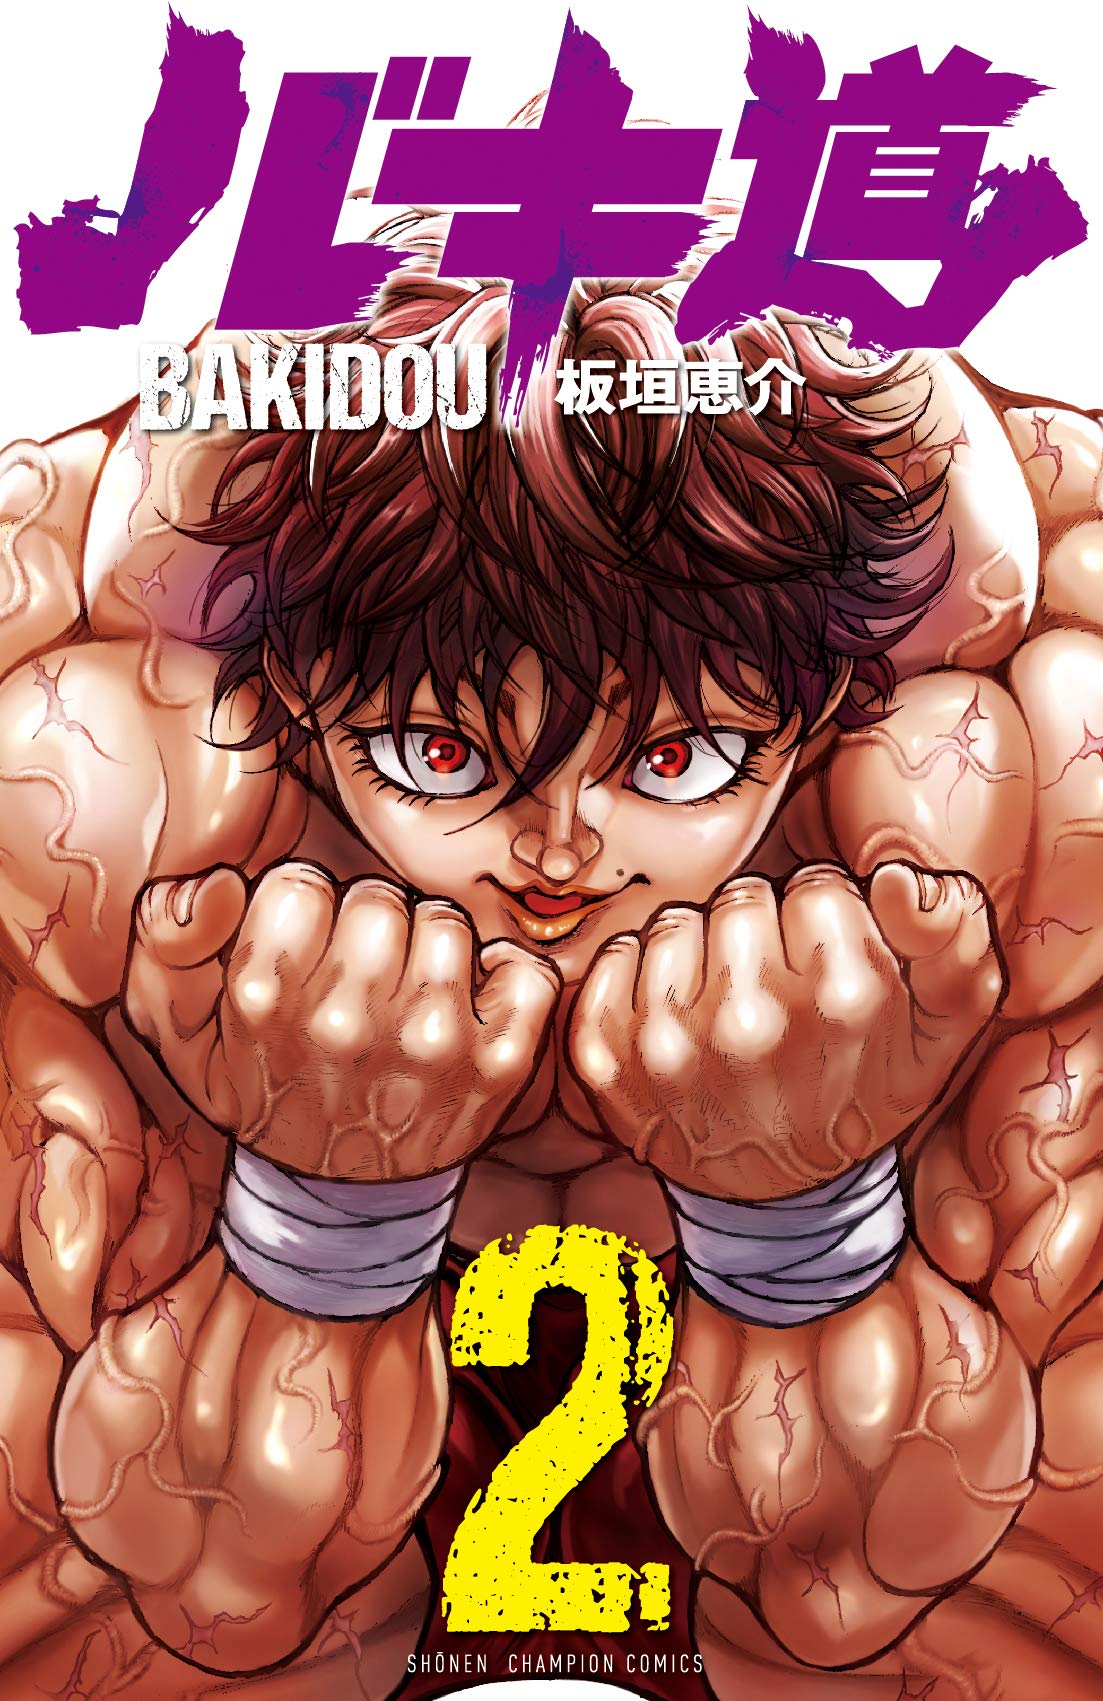 BAKI-DOU BAKIDOU Hanma Baki Vol.1 1 Manga Comic Anime Book from JAPAN